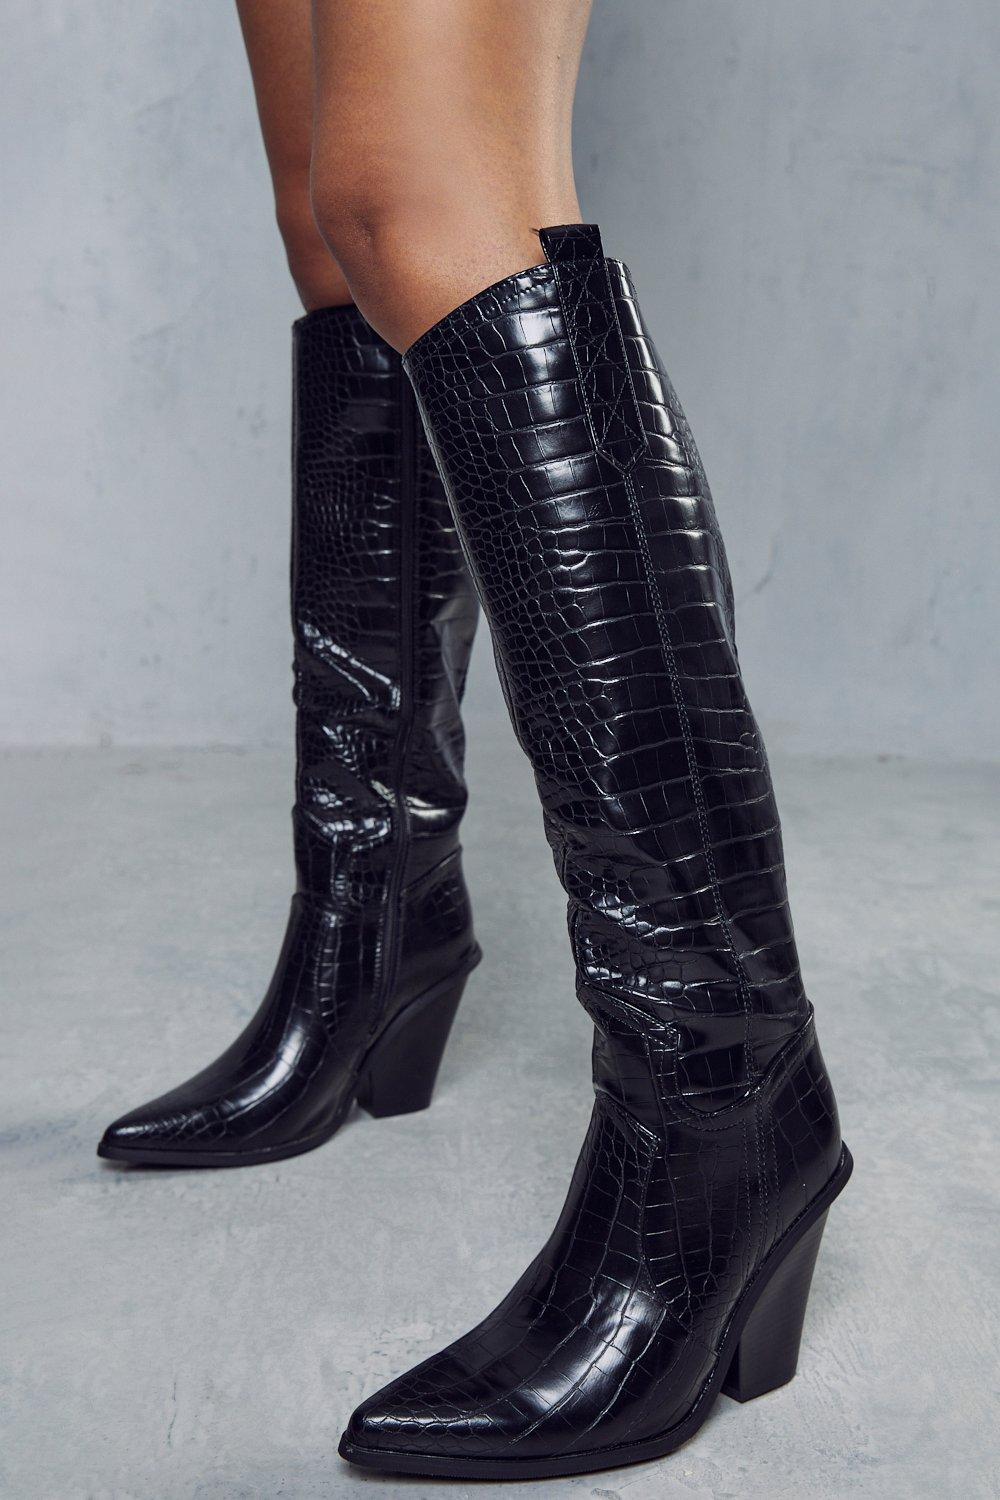 womens premium croc knee high cowboy boots - black - 8, black